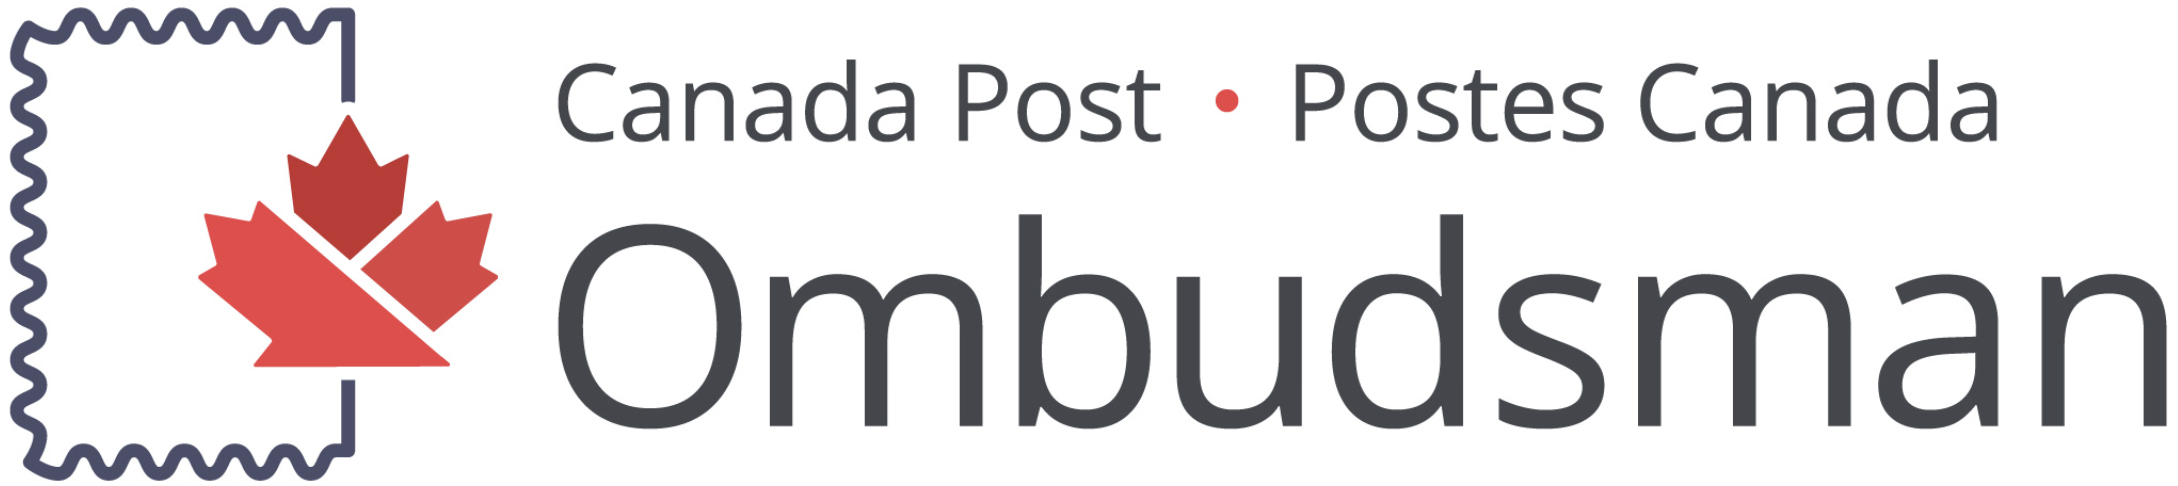 The Canada Post Ombudsman logo.